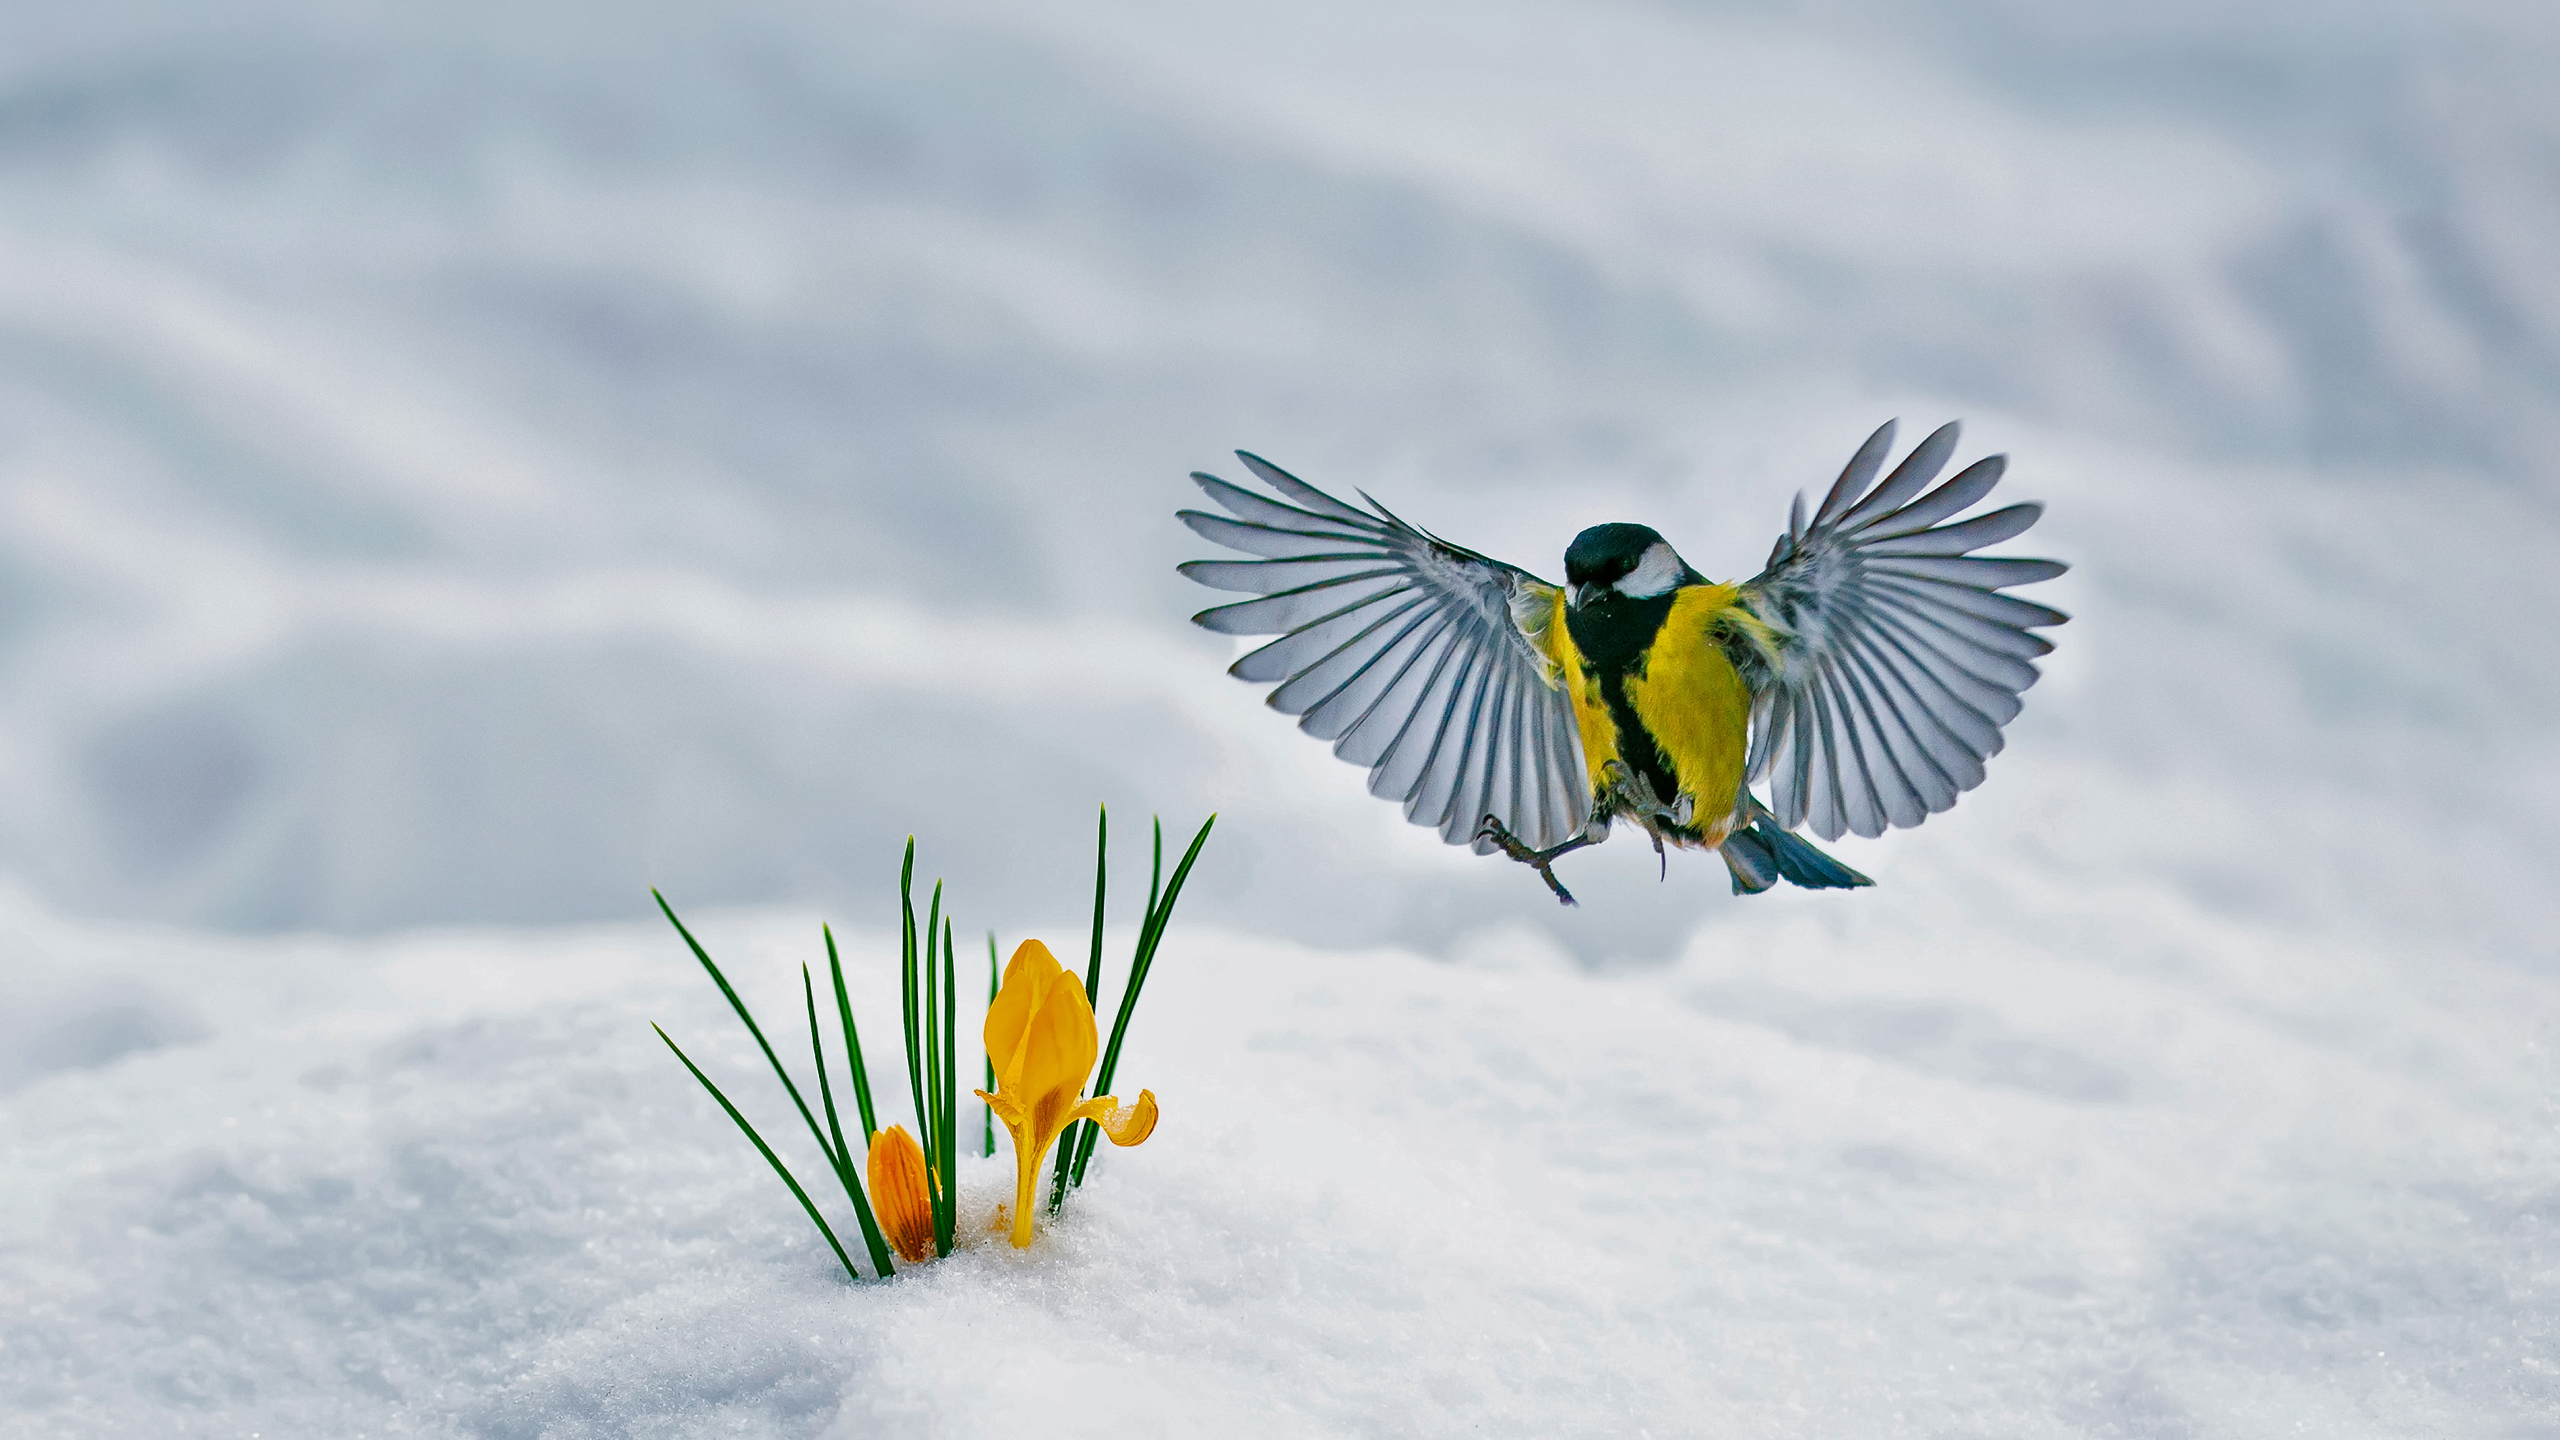 Eurasian Blue tit Bird Is Hovering Near Yellow Crocus Flowers In Blur Snow Field Wallpaper HD Birds